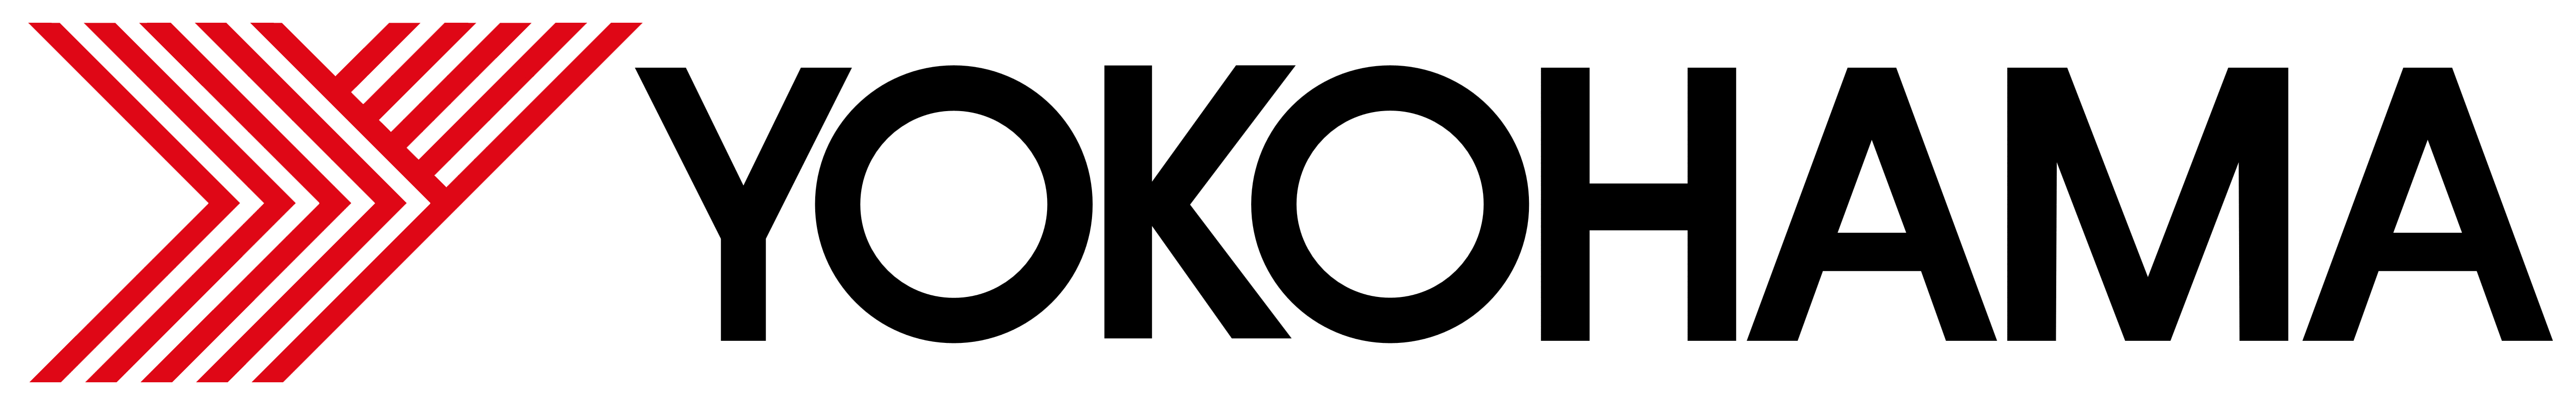 yokohama-logo-2